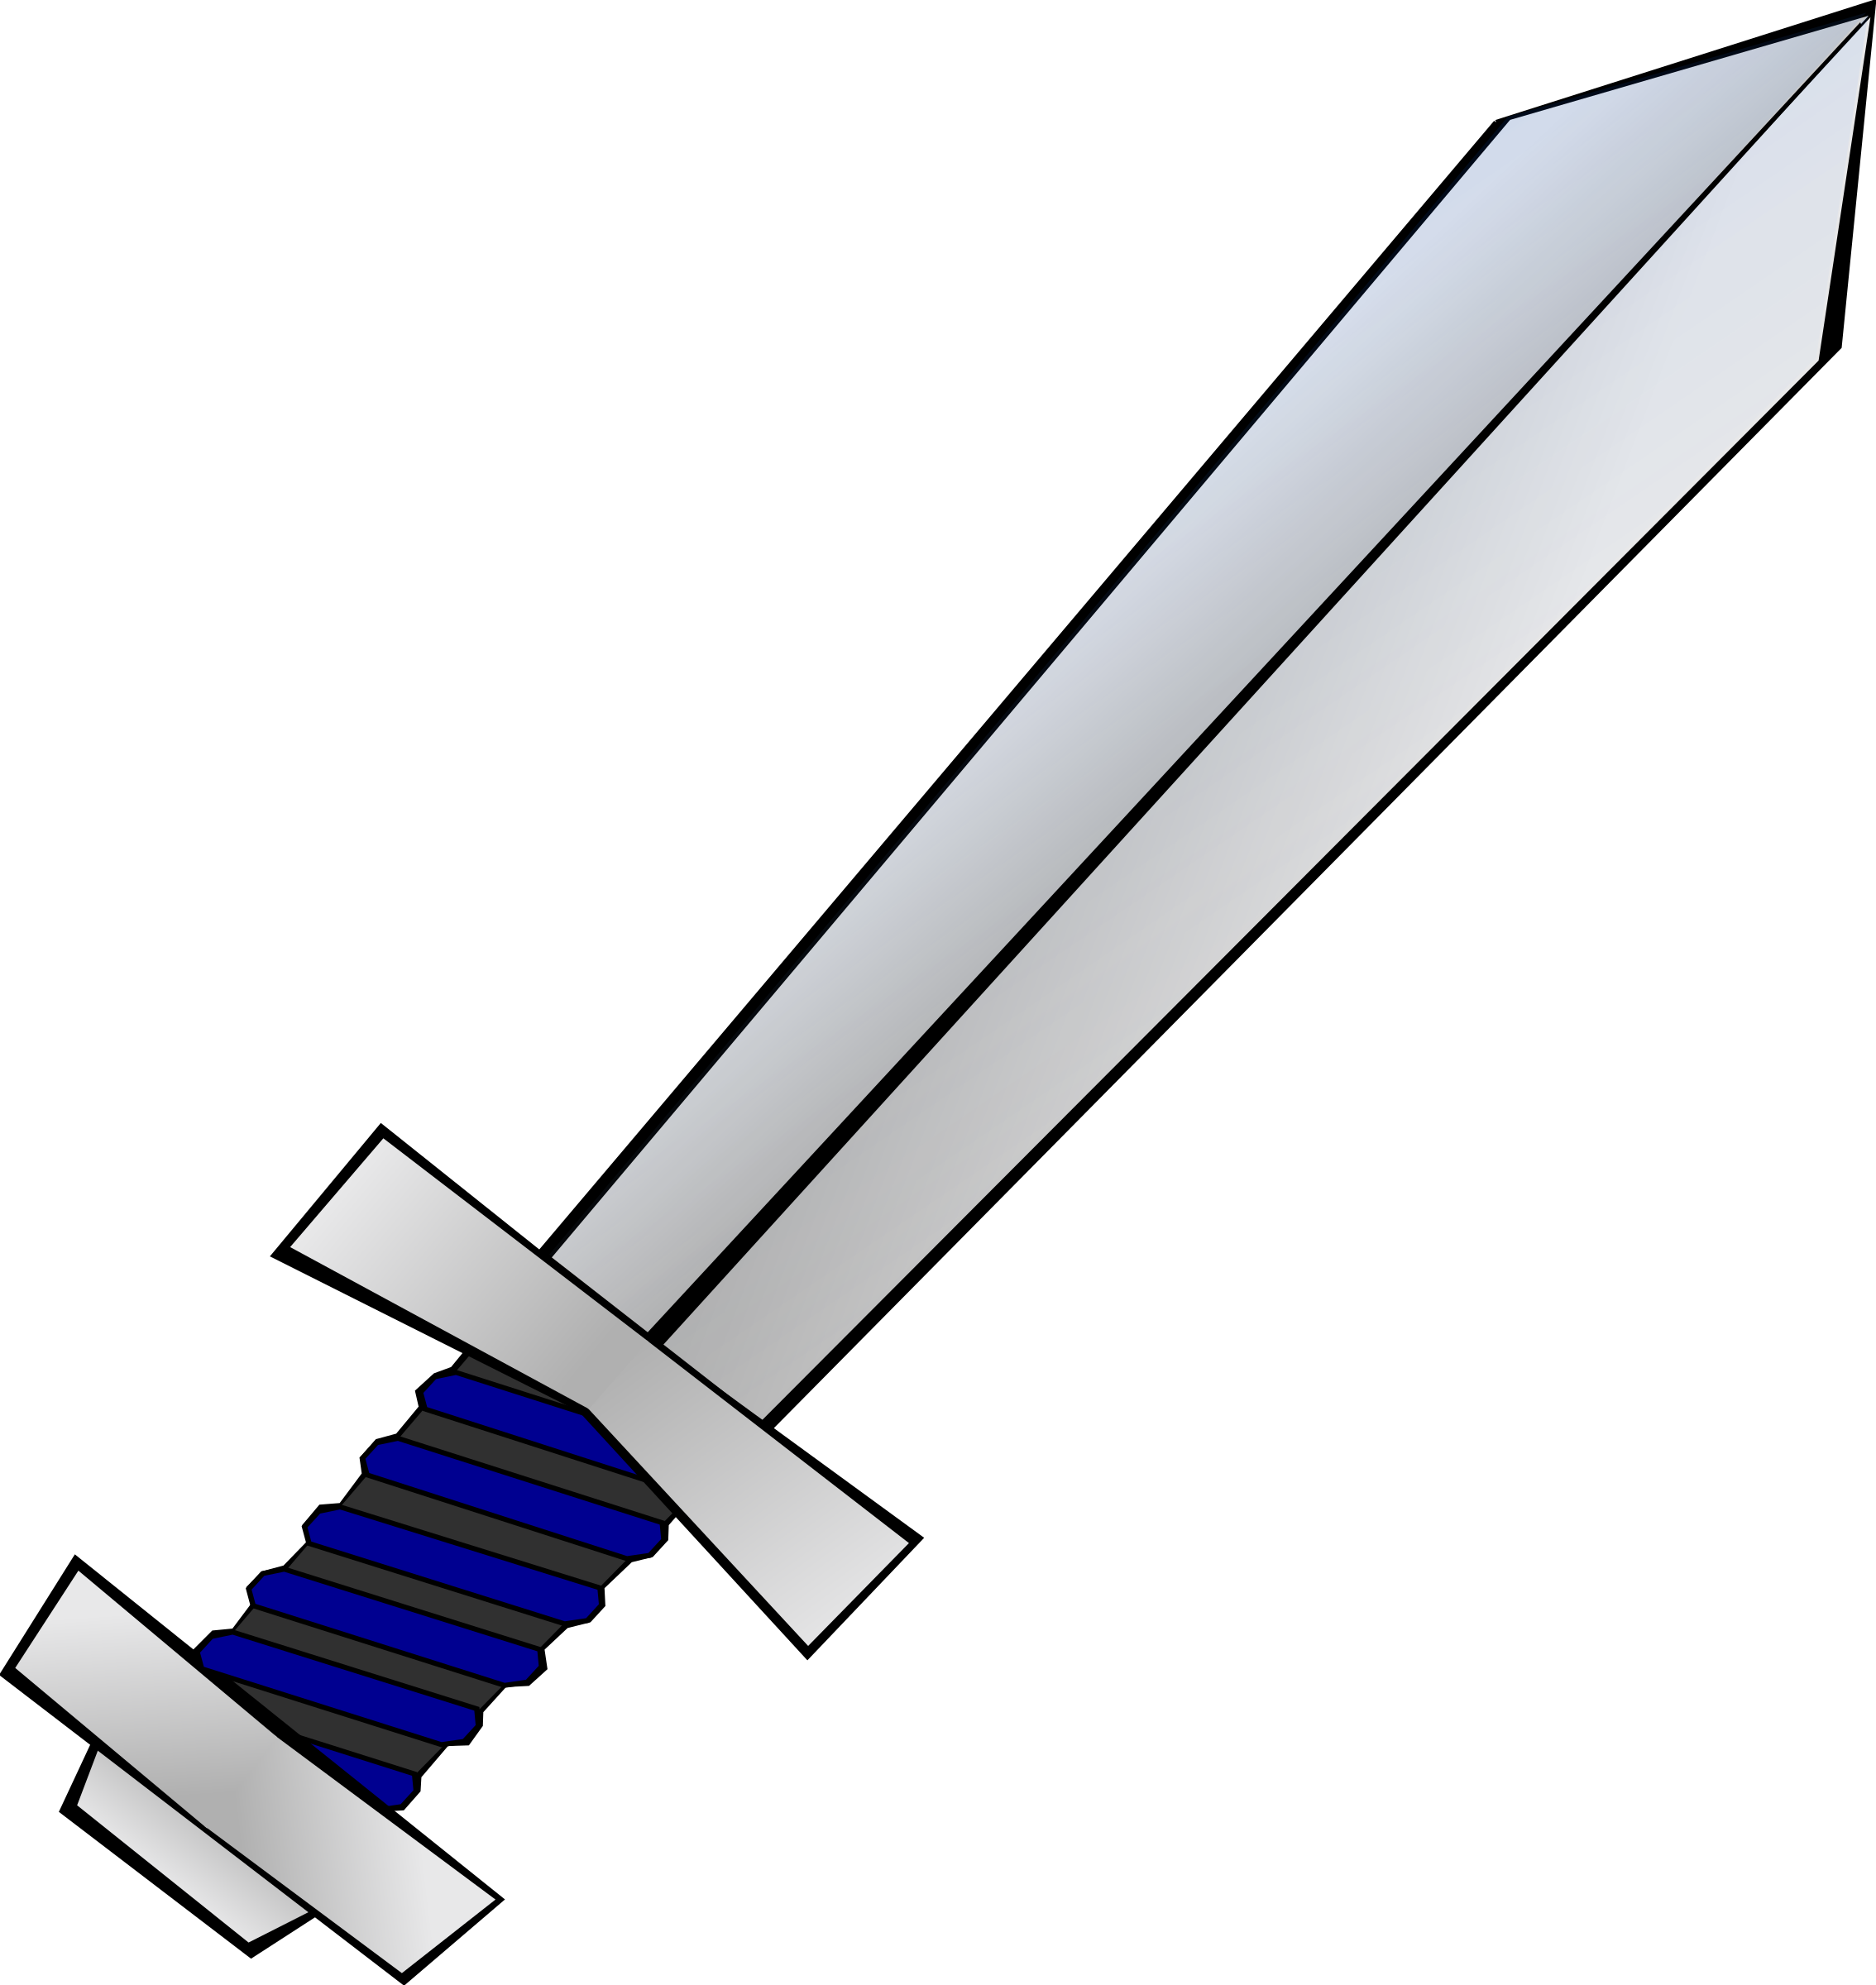 Clipart sword training. Toy by nicubunu a